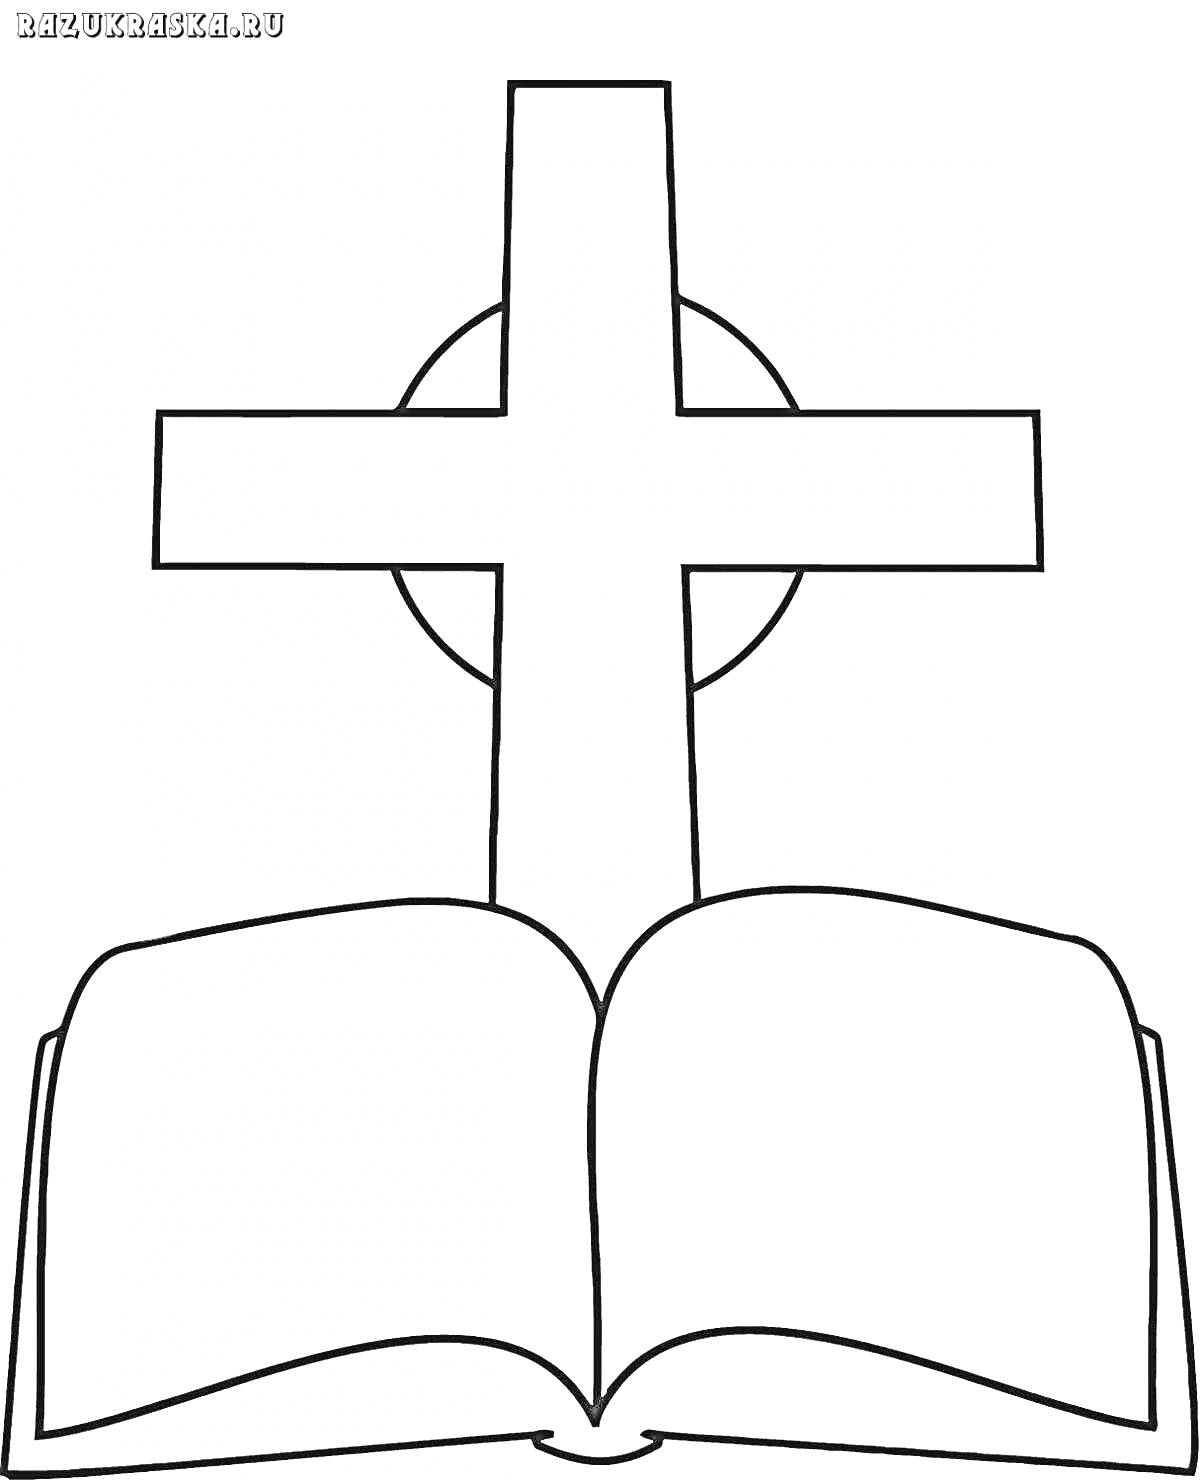 Раскраска Крест и раскрытая книга на фоне круга